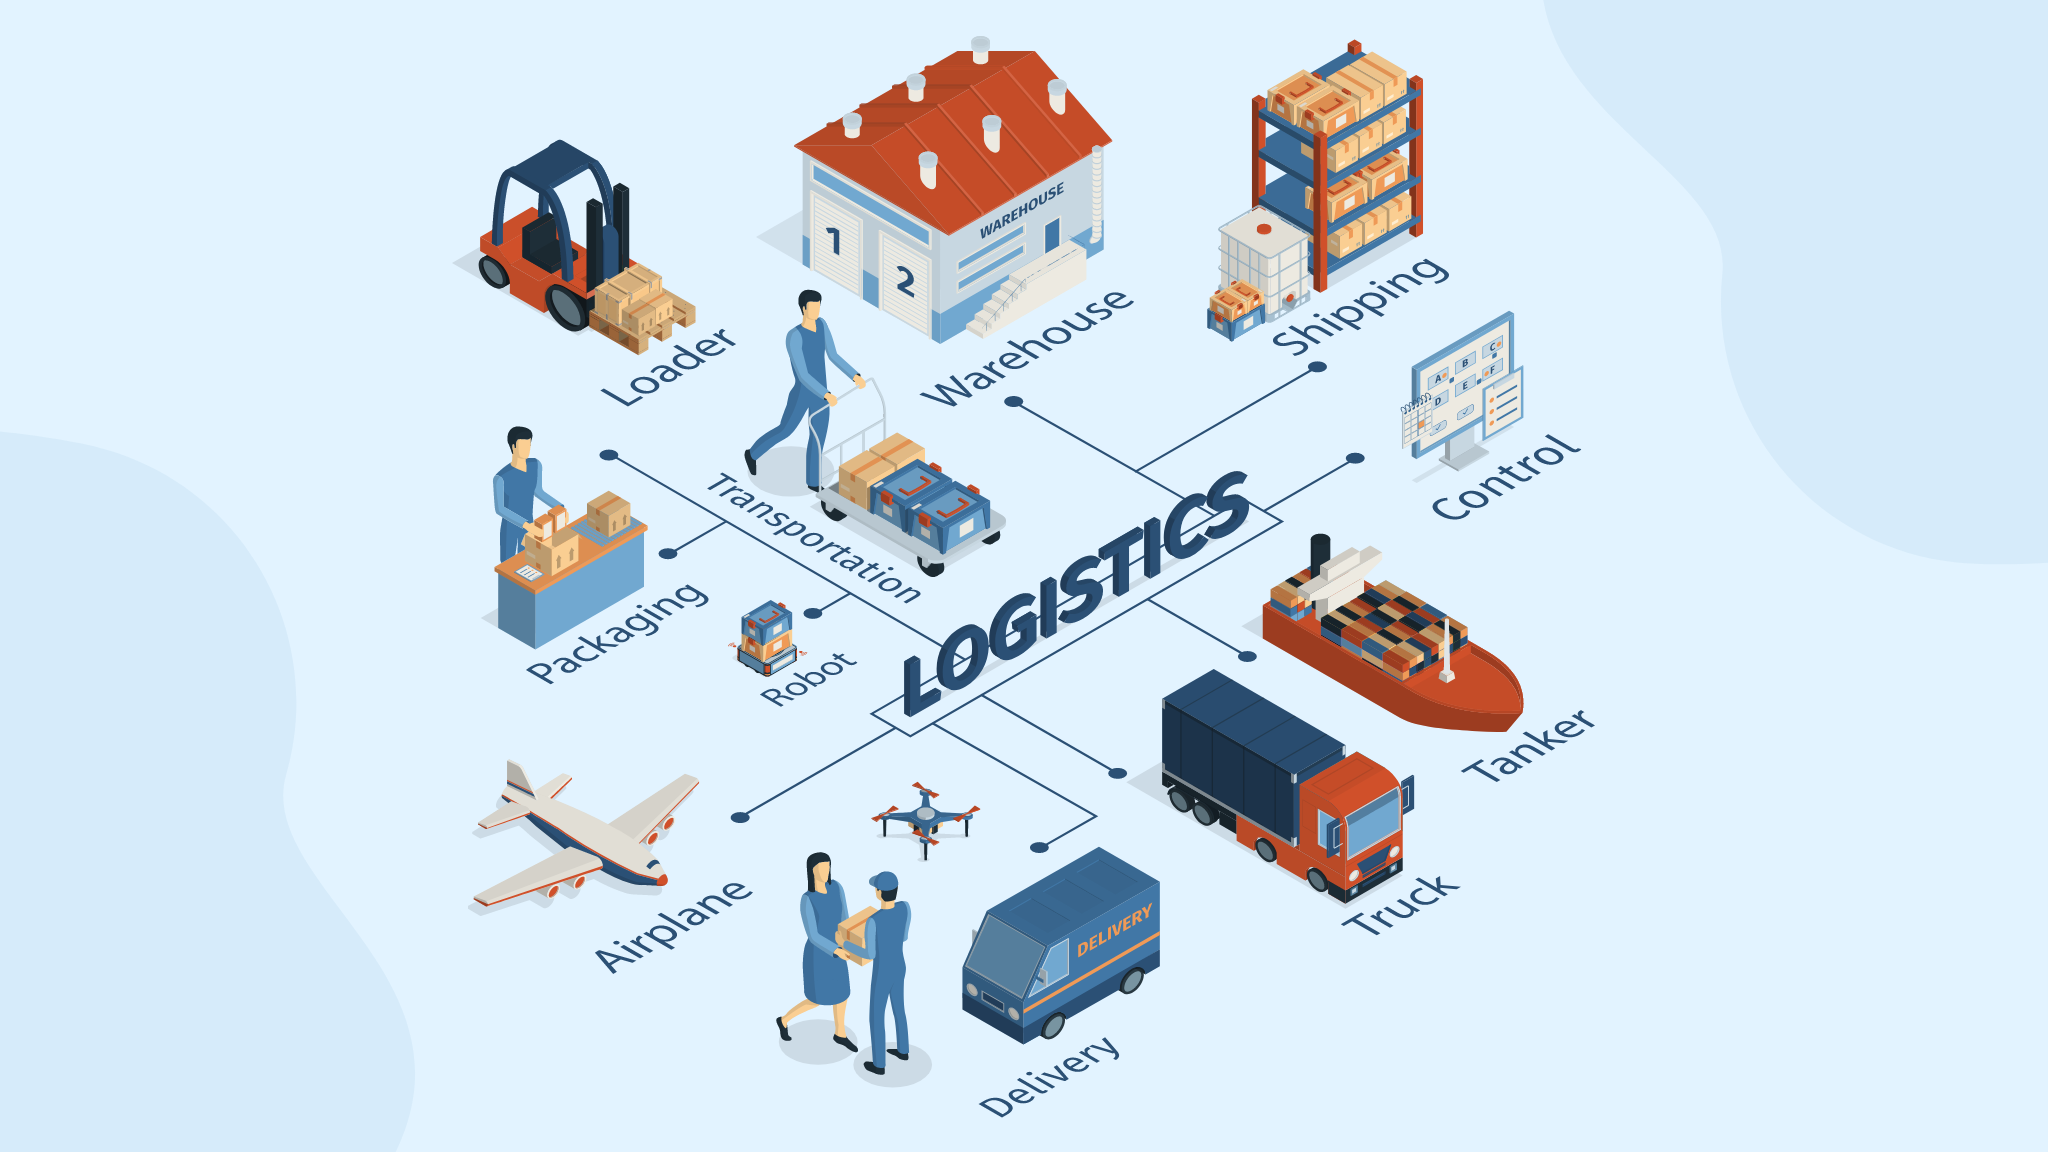 otx logistics readerlink